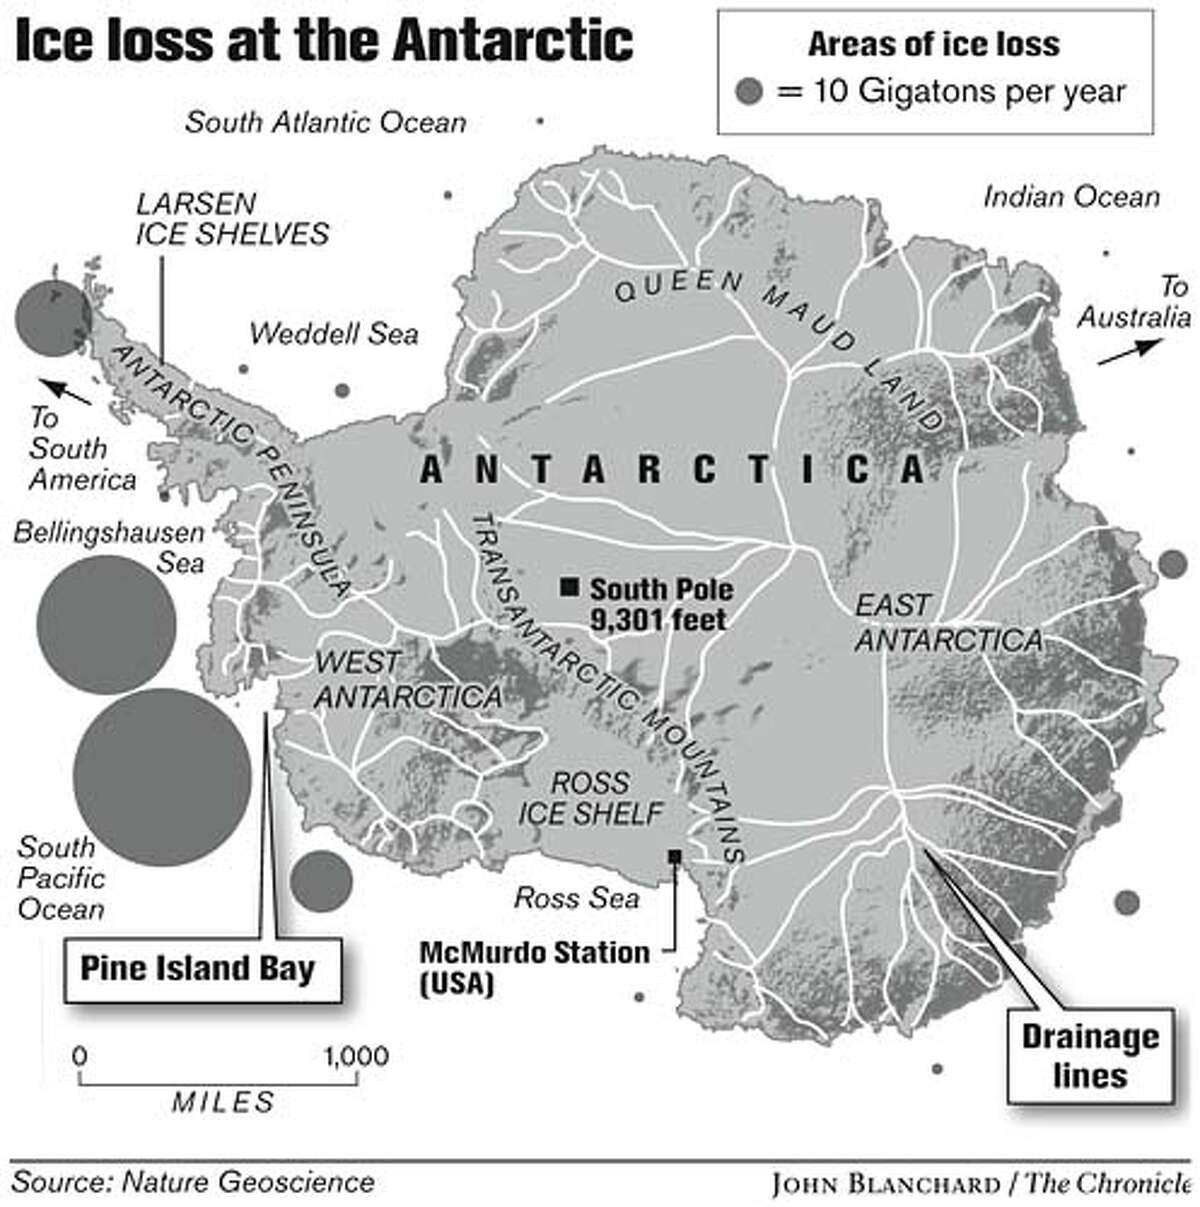 Ice loss at the Antarctic. Chronicle graphic by John Blanchard